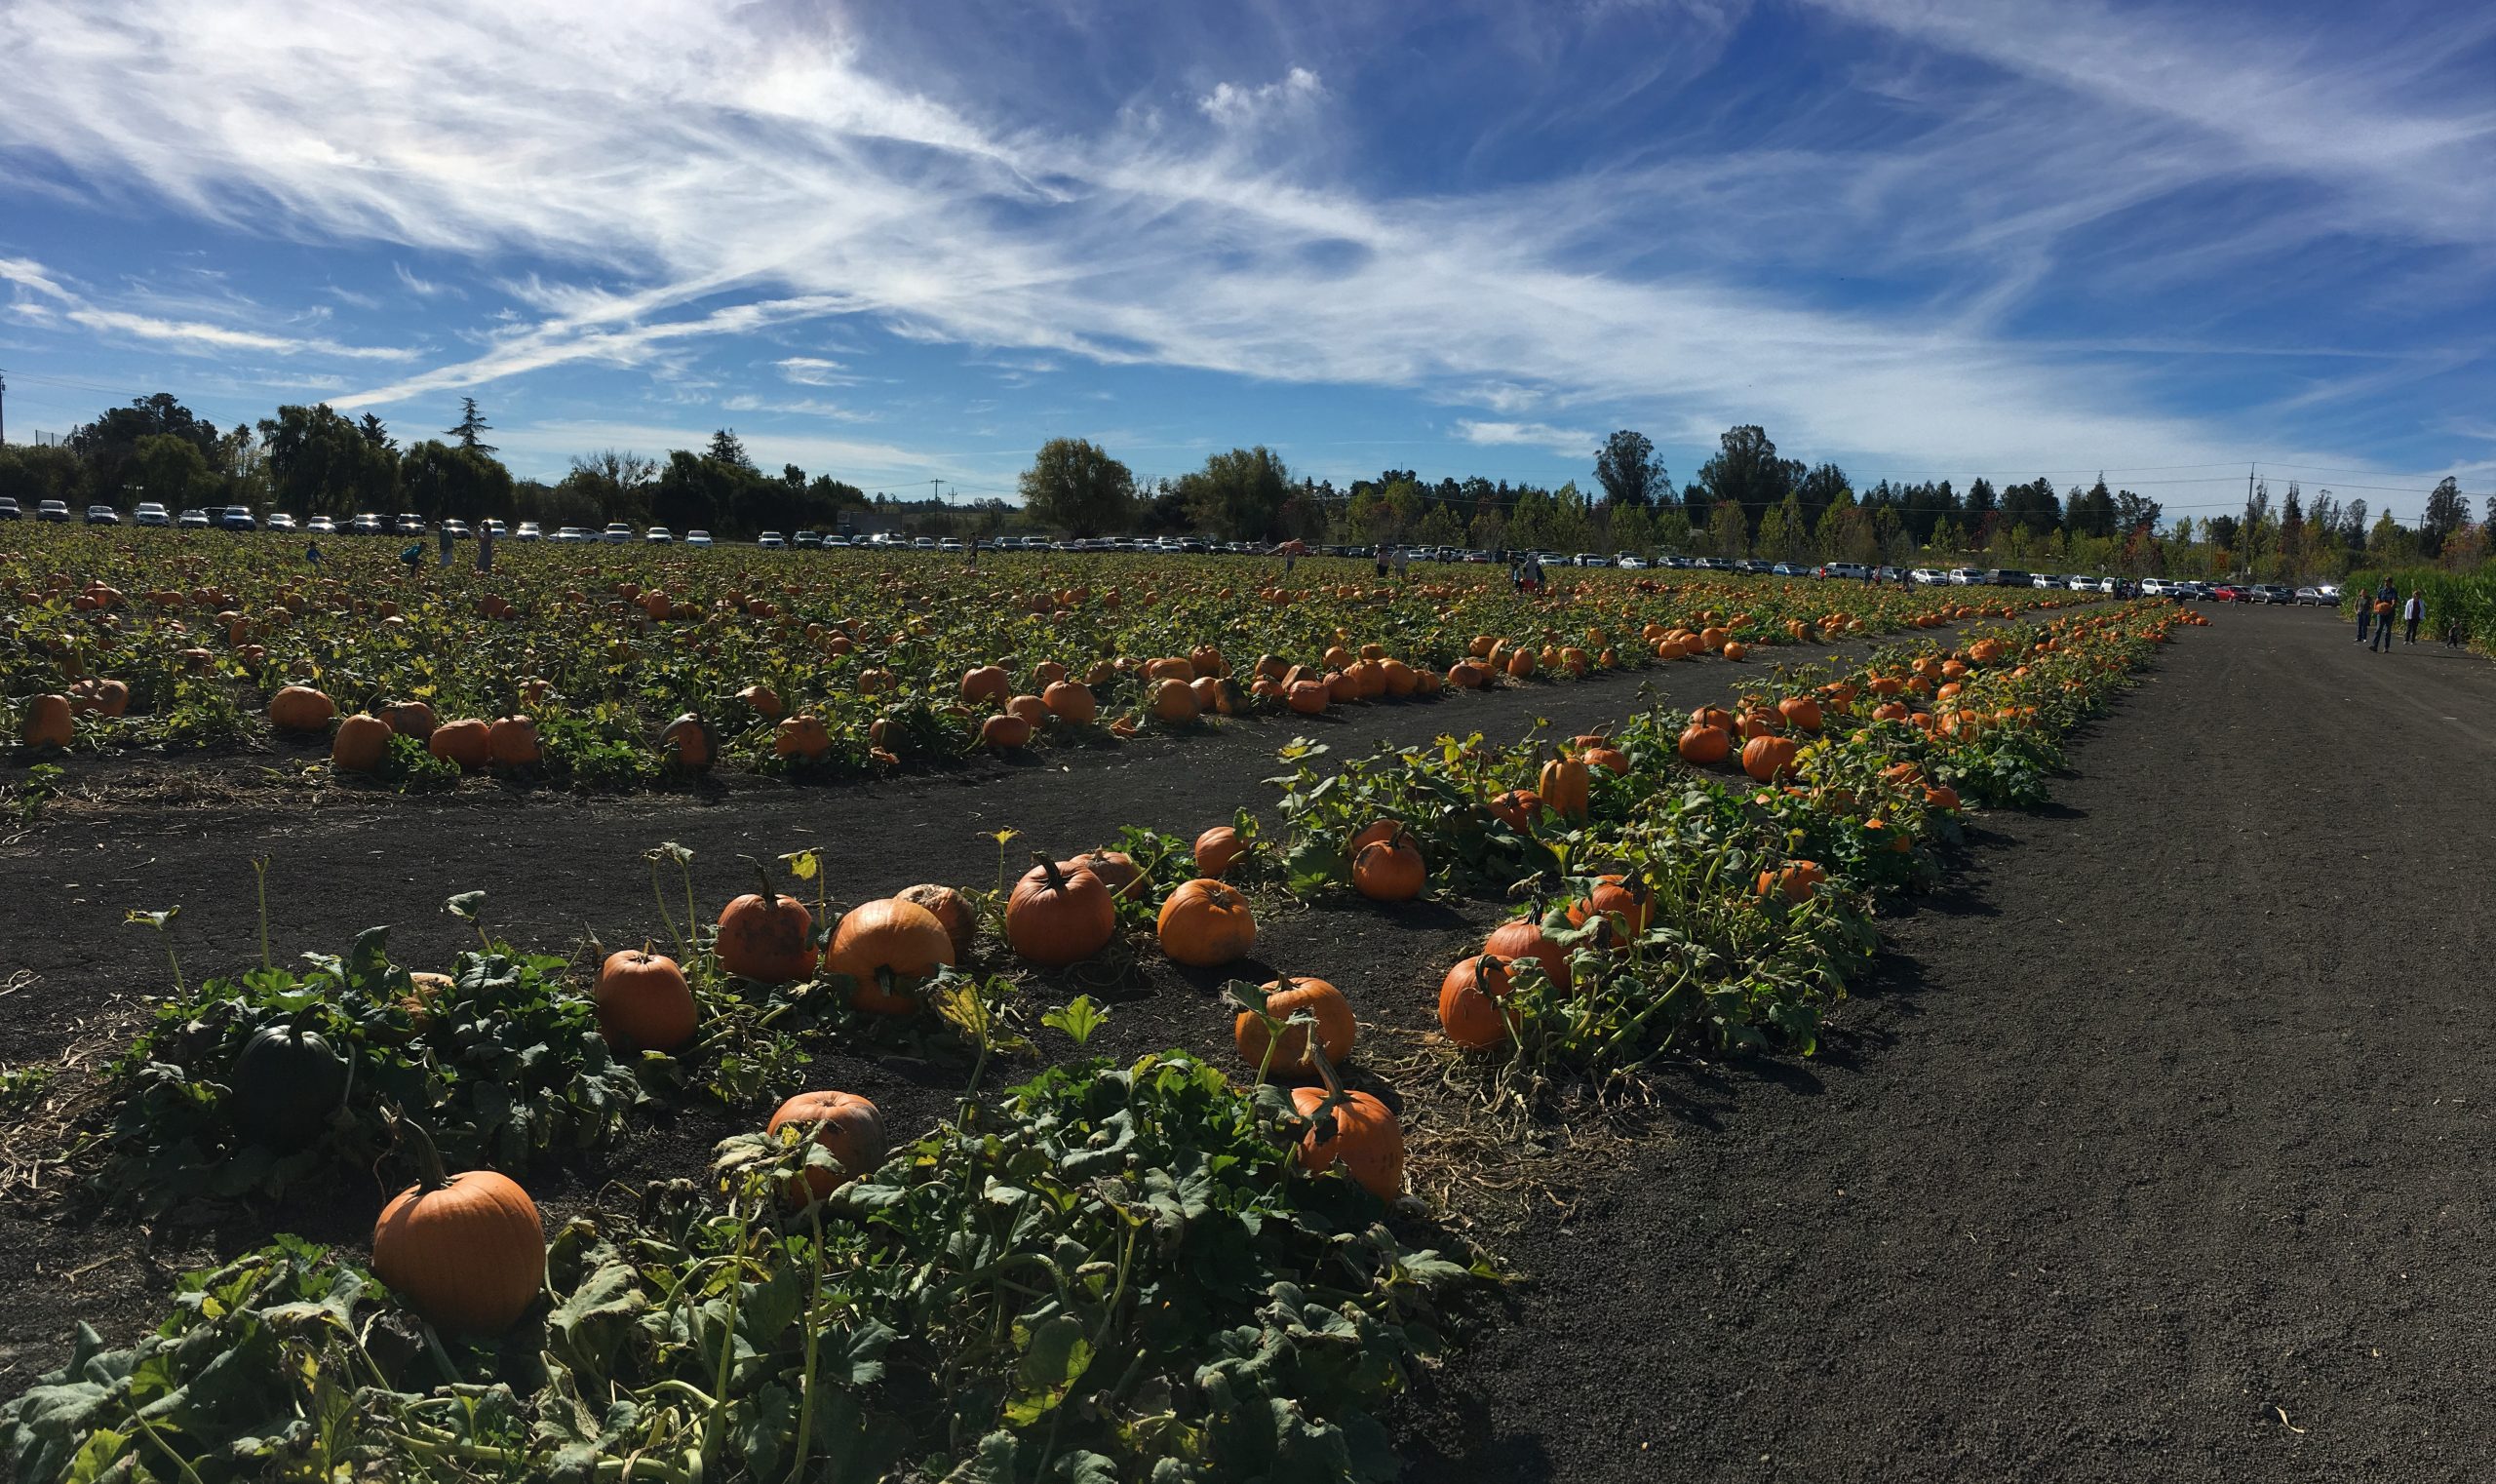 About Us Petaluma Pumpkin Patch and Amazing Corn Maze